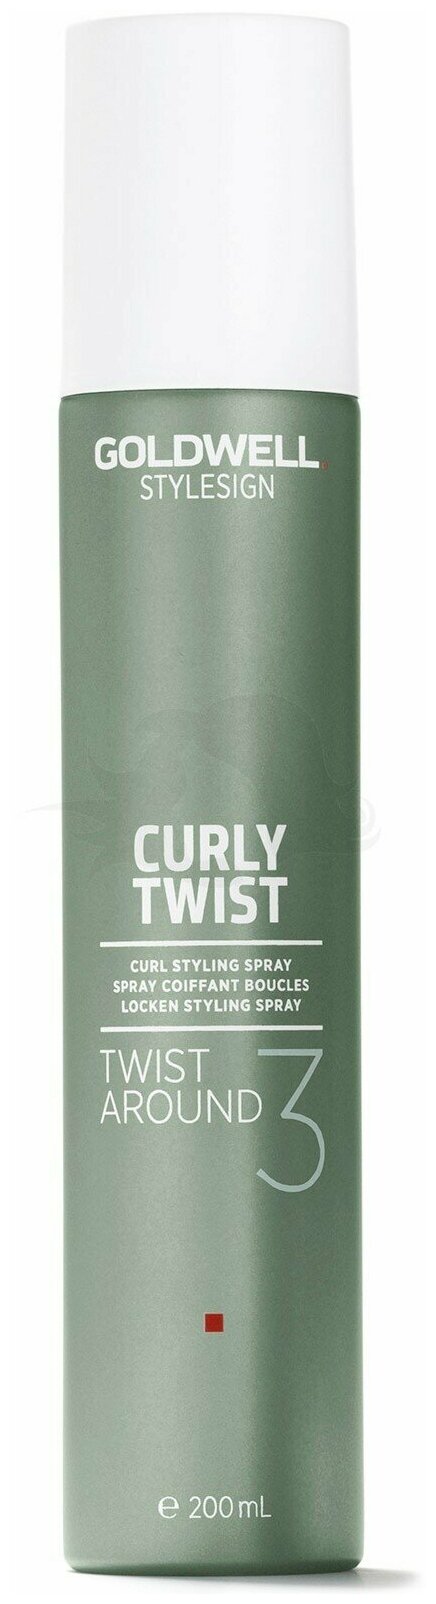 Goldwell Curly Twist cпрей для укладки волос Twist Around, средняя фиксация, 200 мл